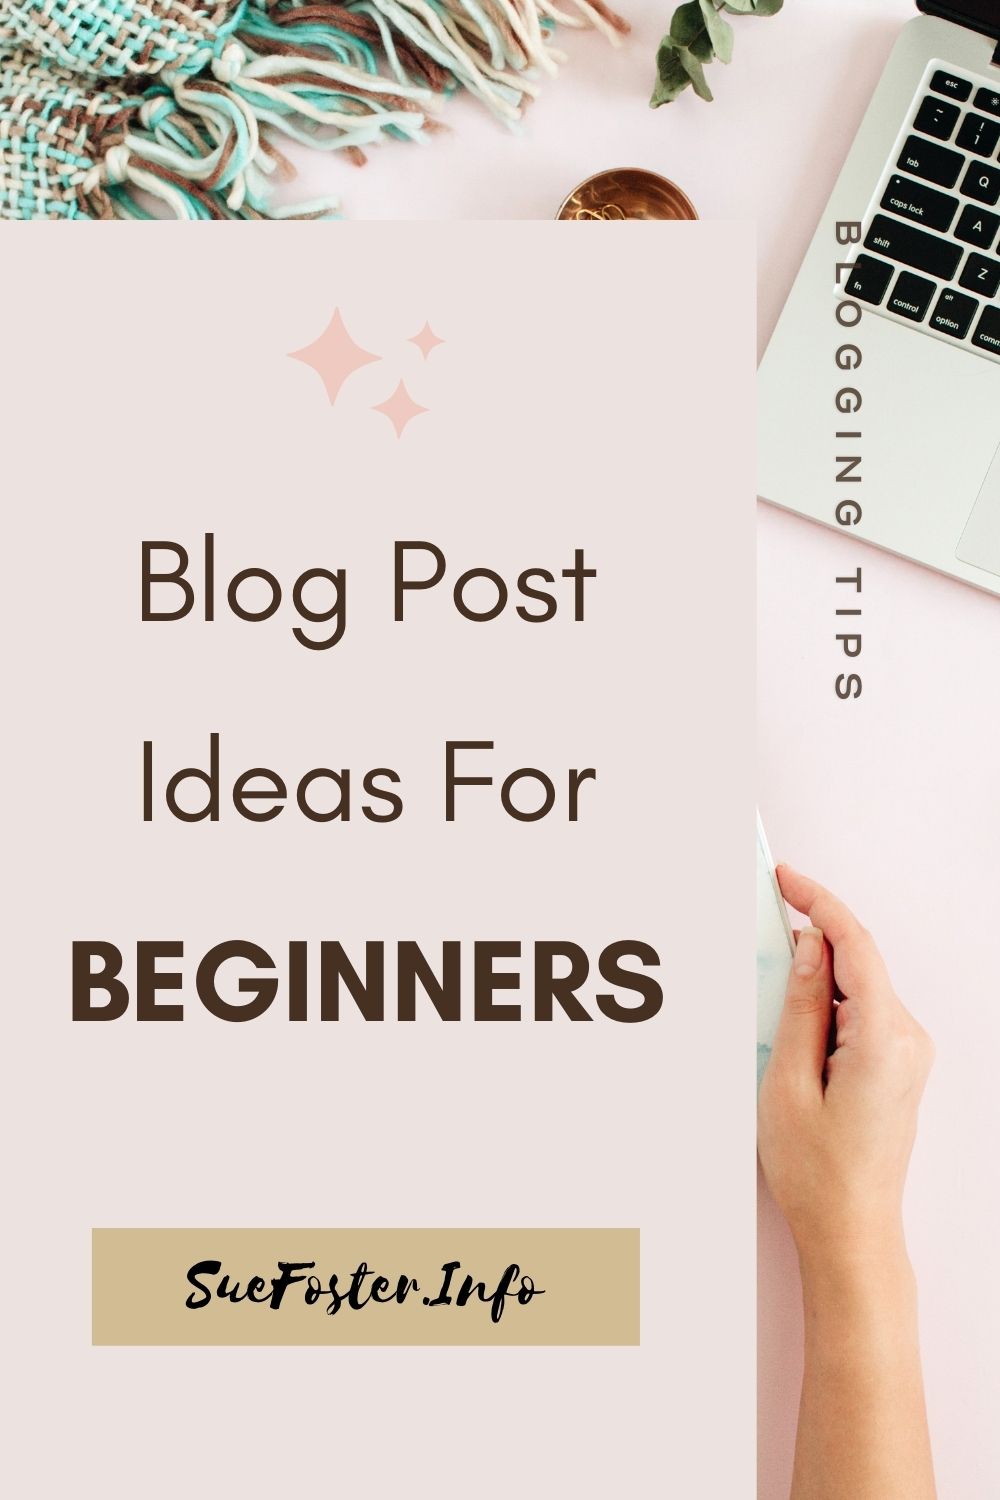 Blog post ideas for beginners